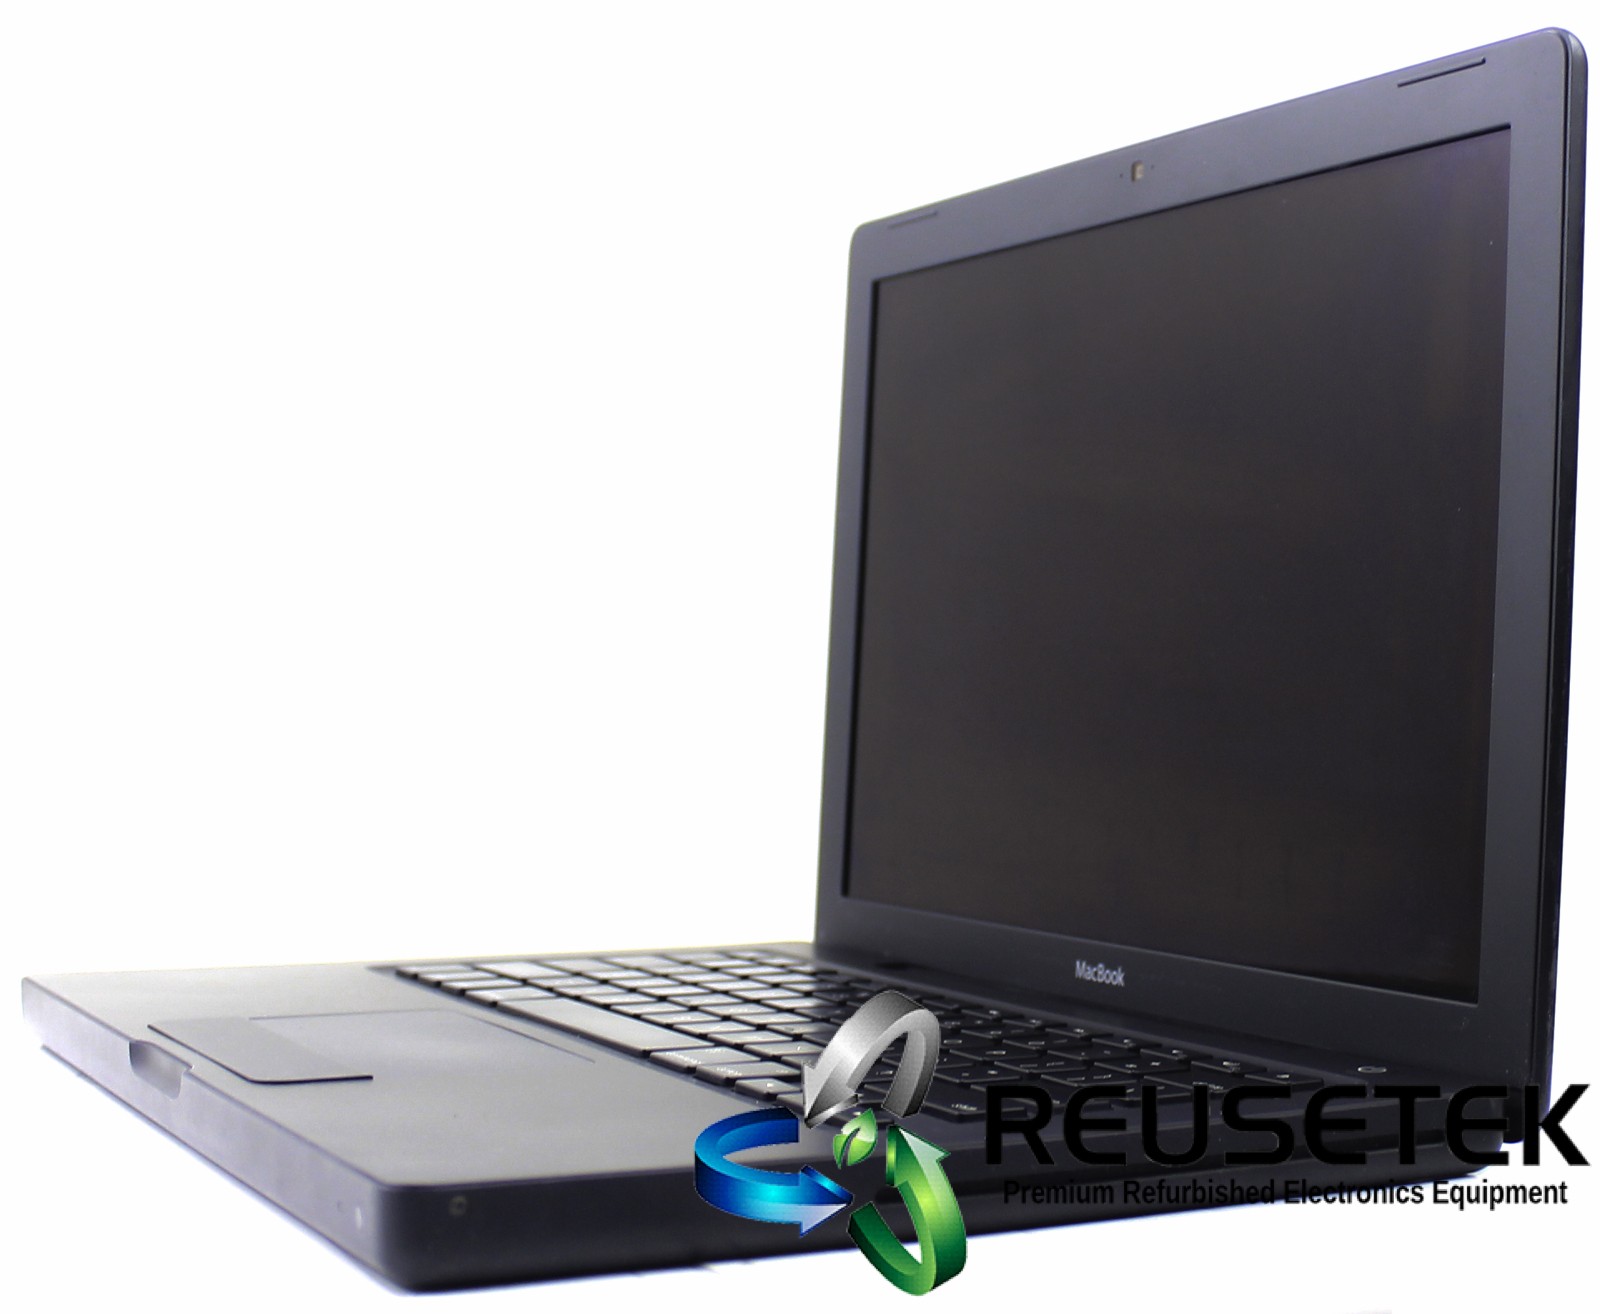 100467-SN12512680-Apple Macbook A1181 (MB404LL/A) 13" Notebook Laptop-image